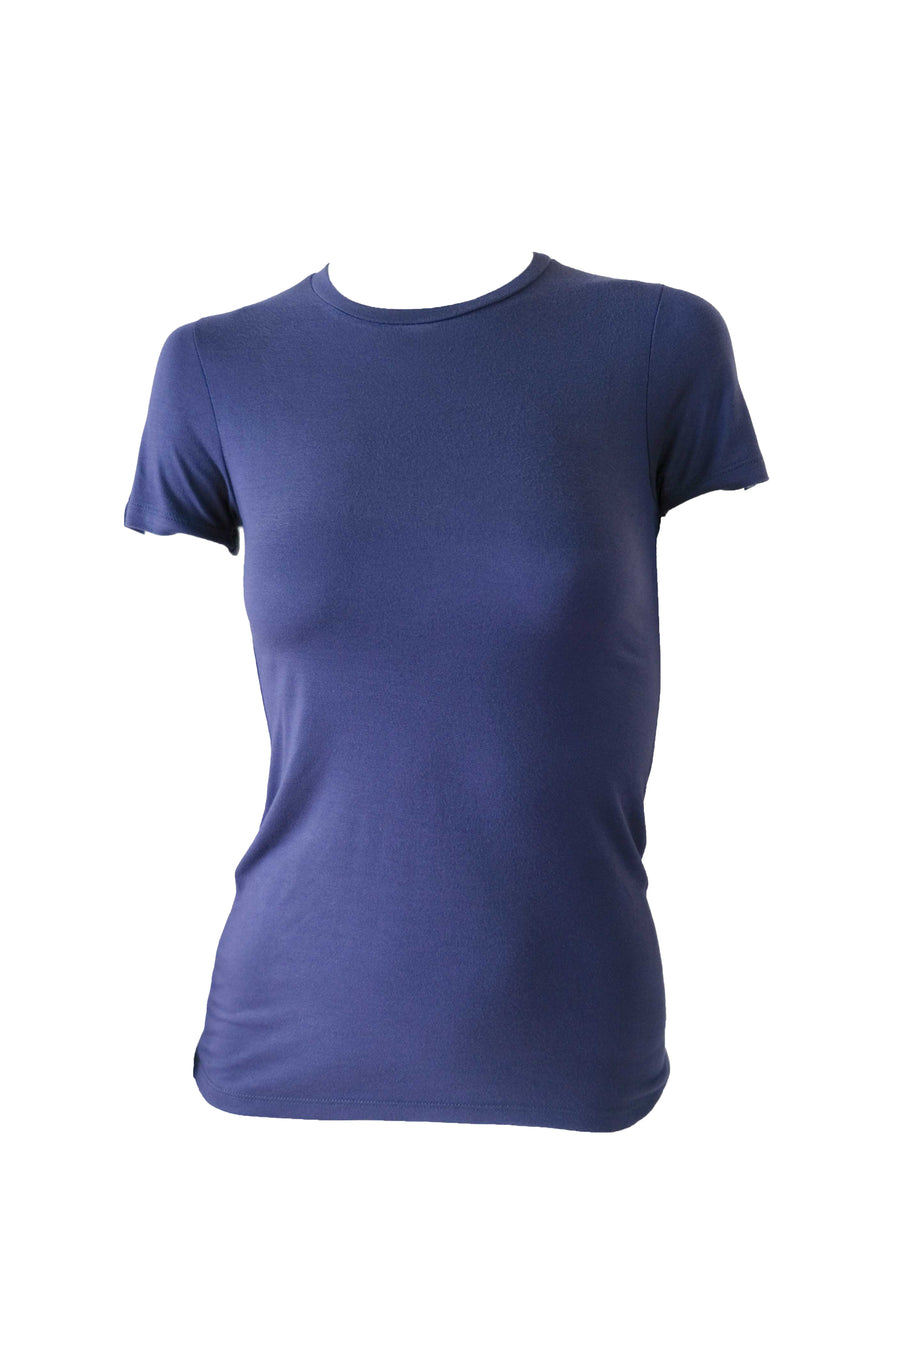 Basic Round Neck Shirt - Navy Blue